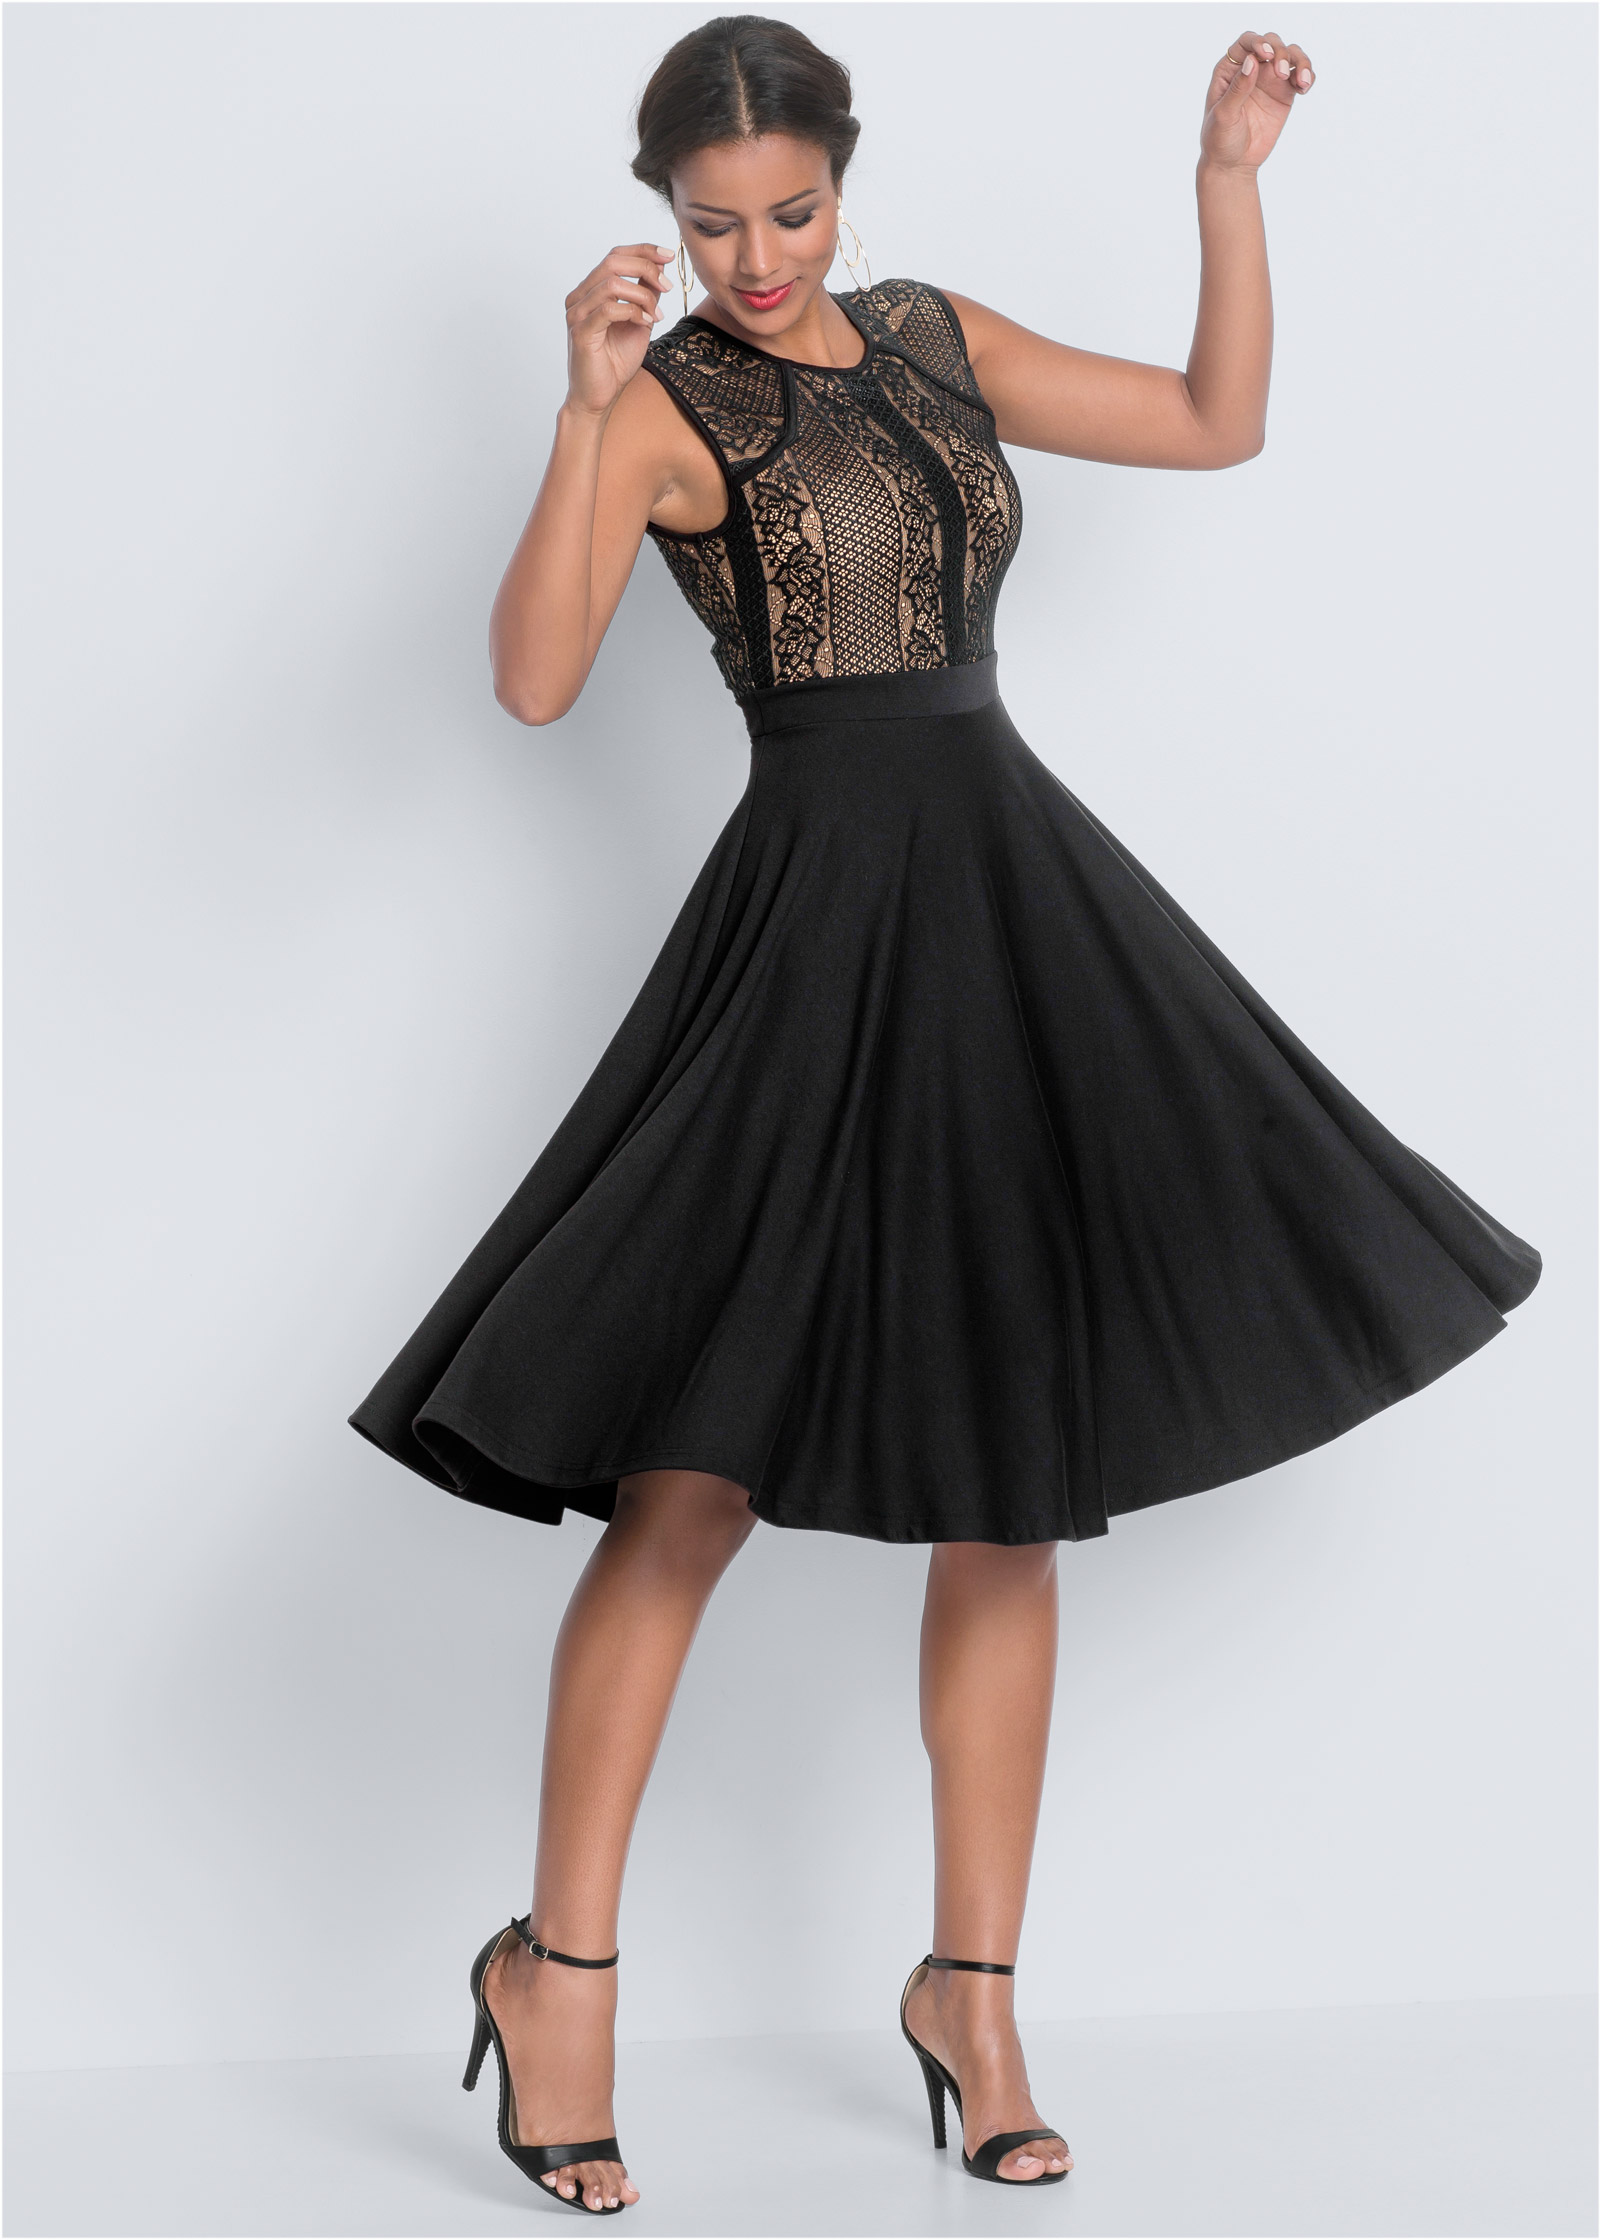 venus black lace dress